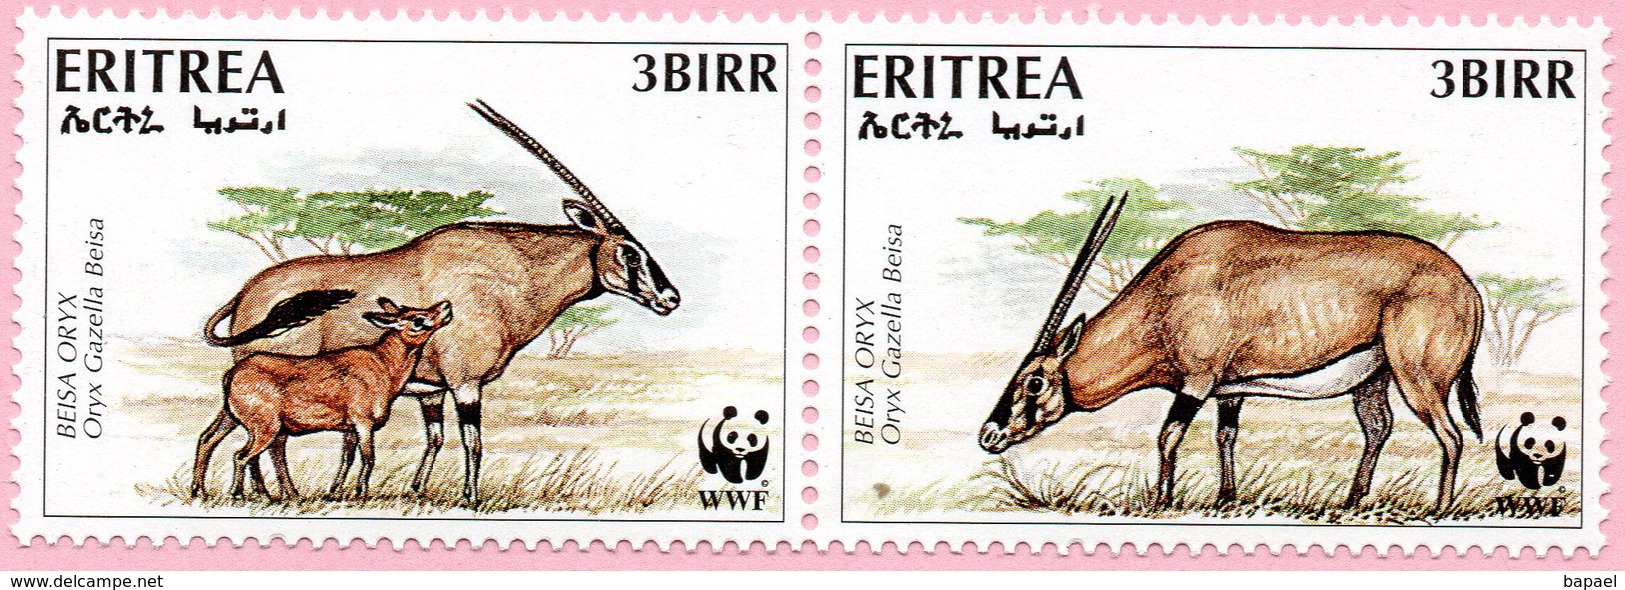 N° Yvert Et Tellier 282 Et 283 - Timbre D'Erythrée (1996) - WWF - MNH - L'Oryx Beisa - Erythrée